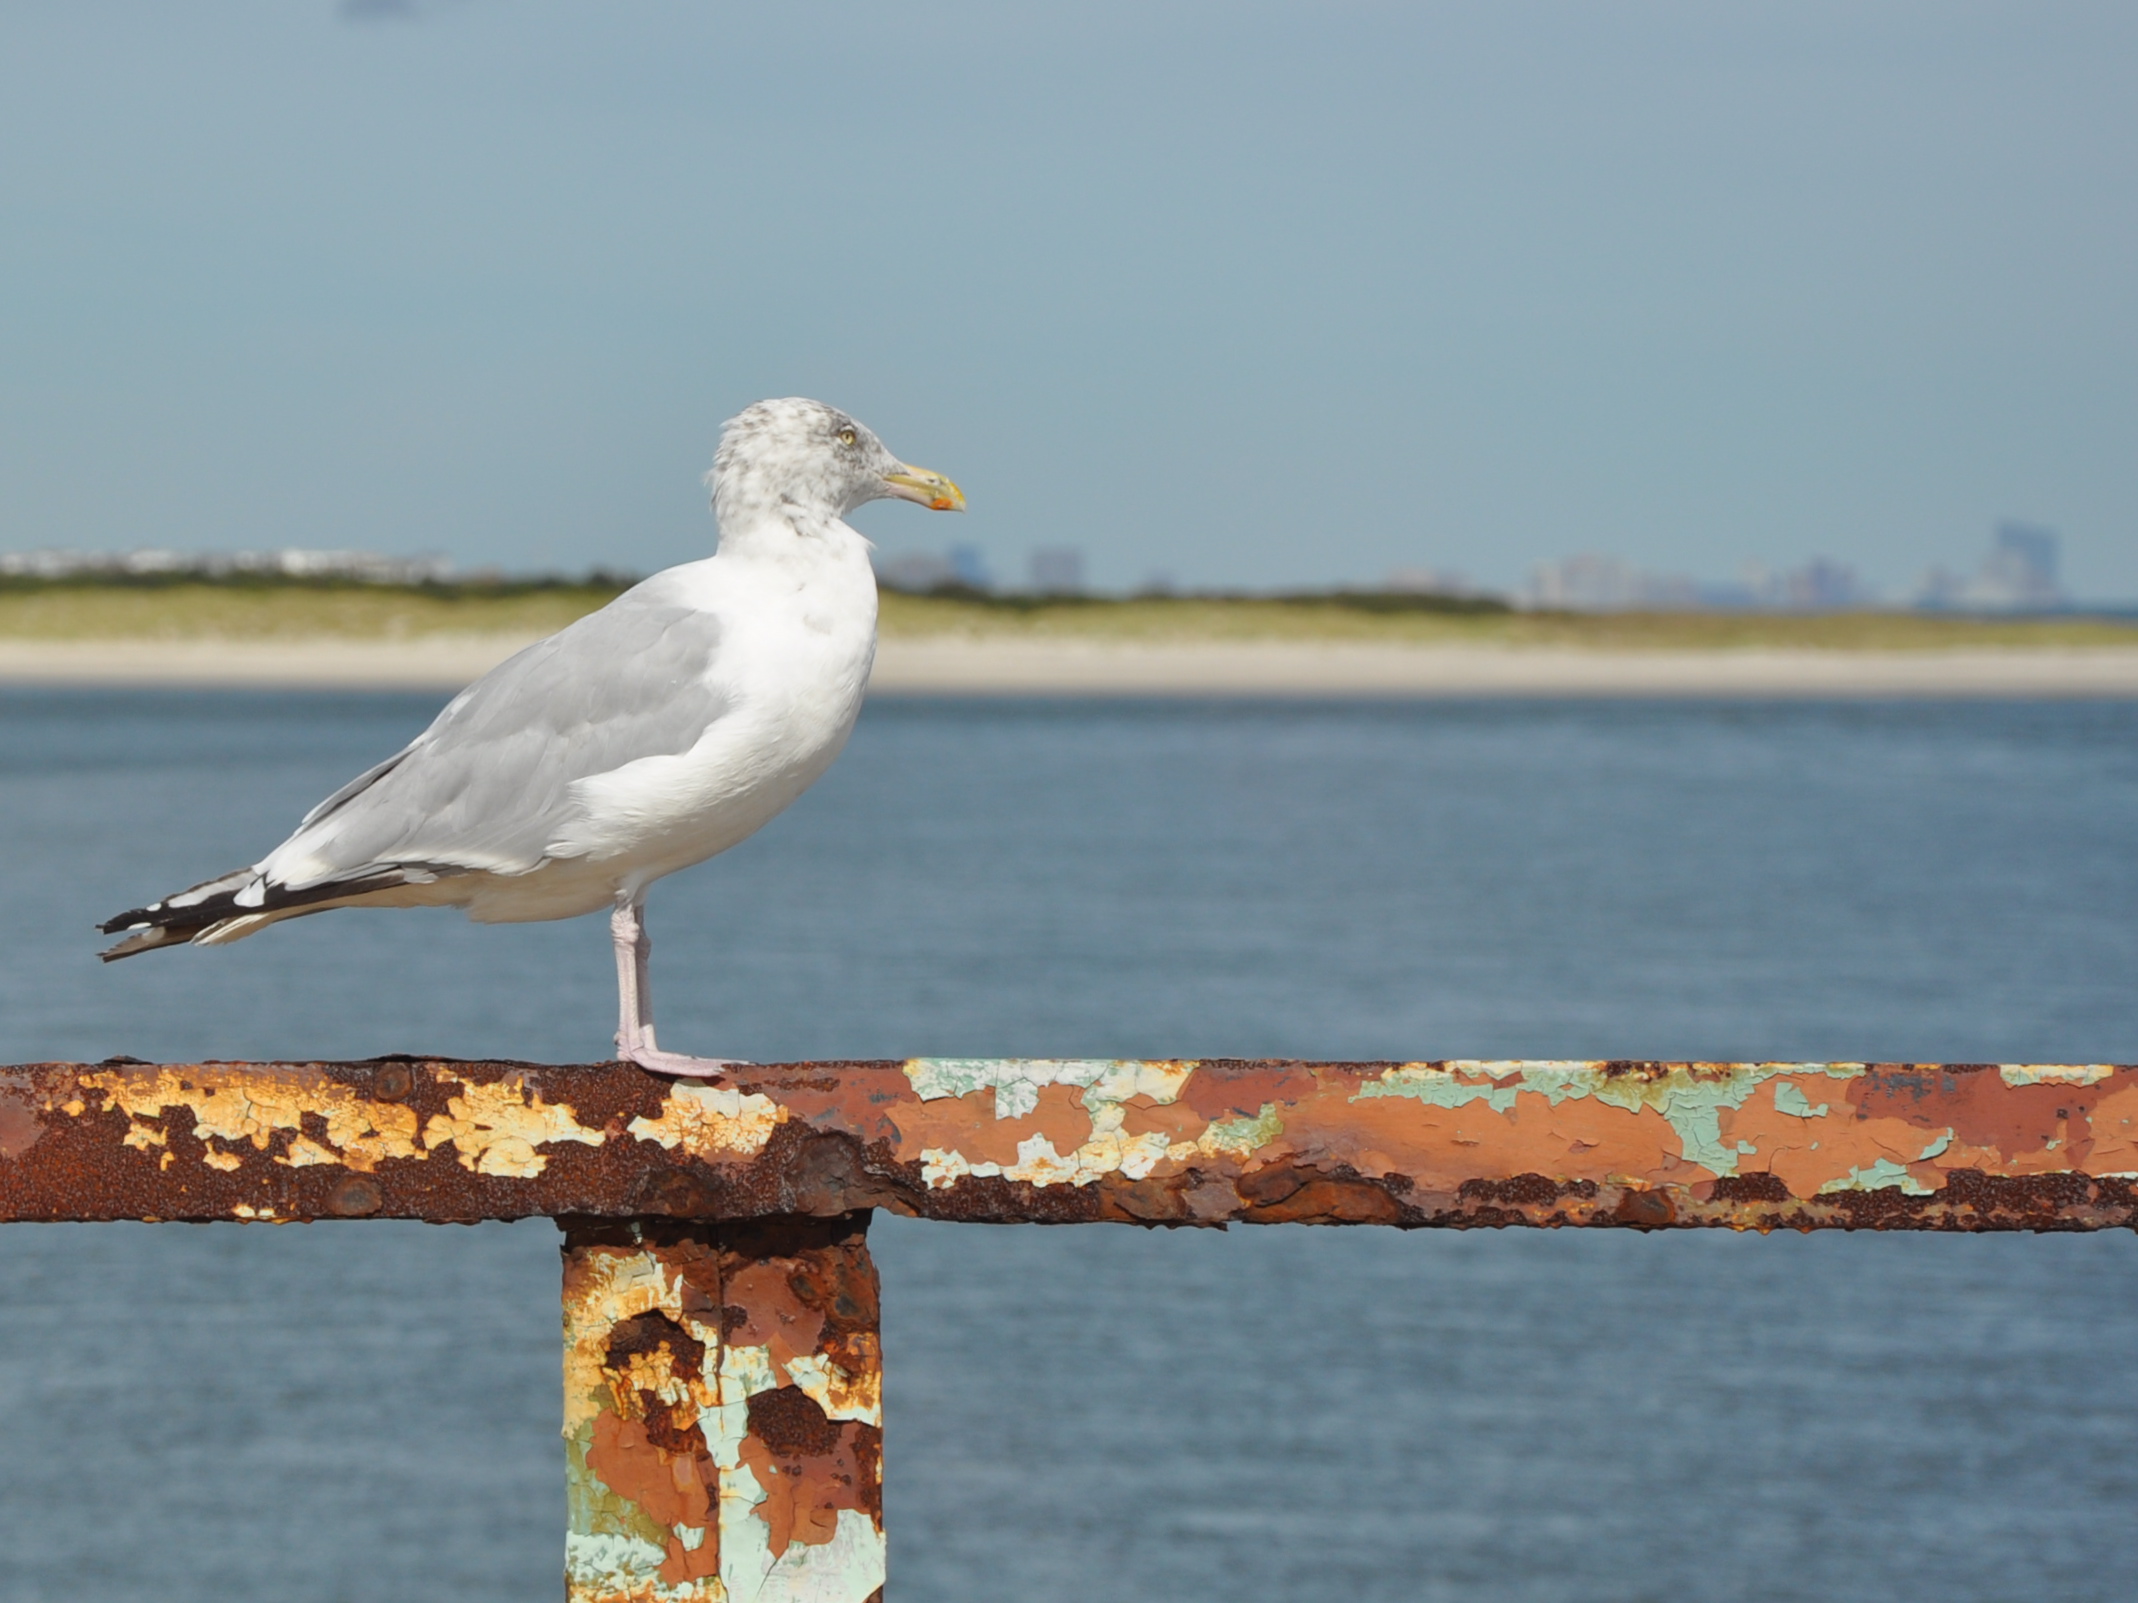 Seagull on a Bridge